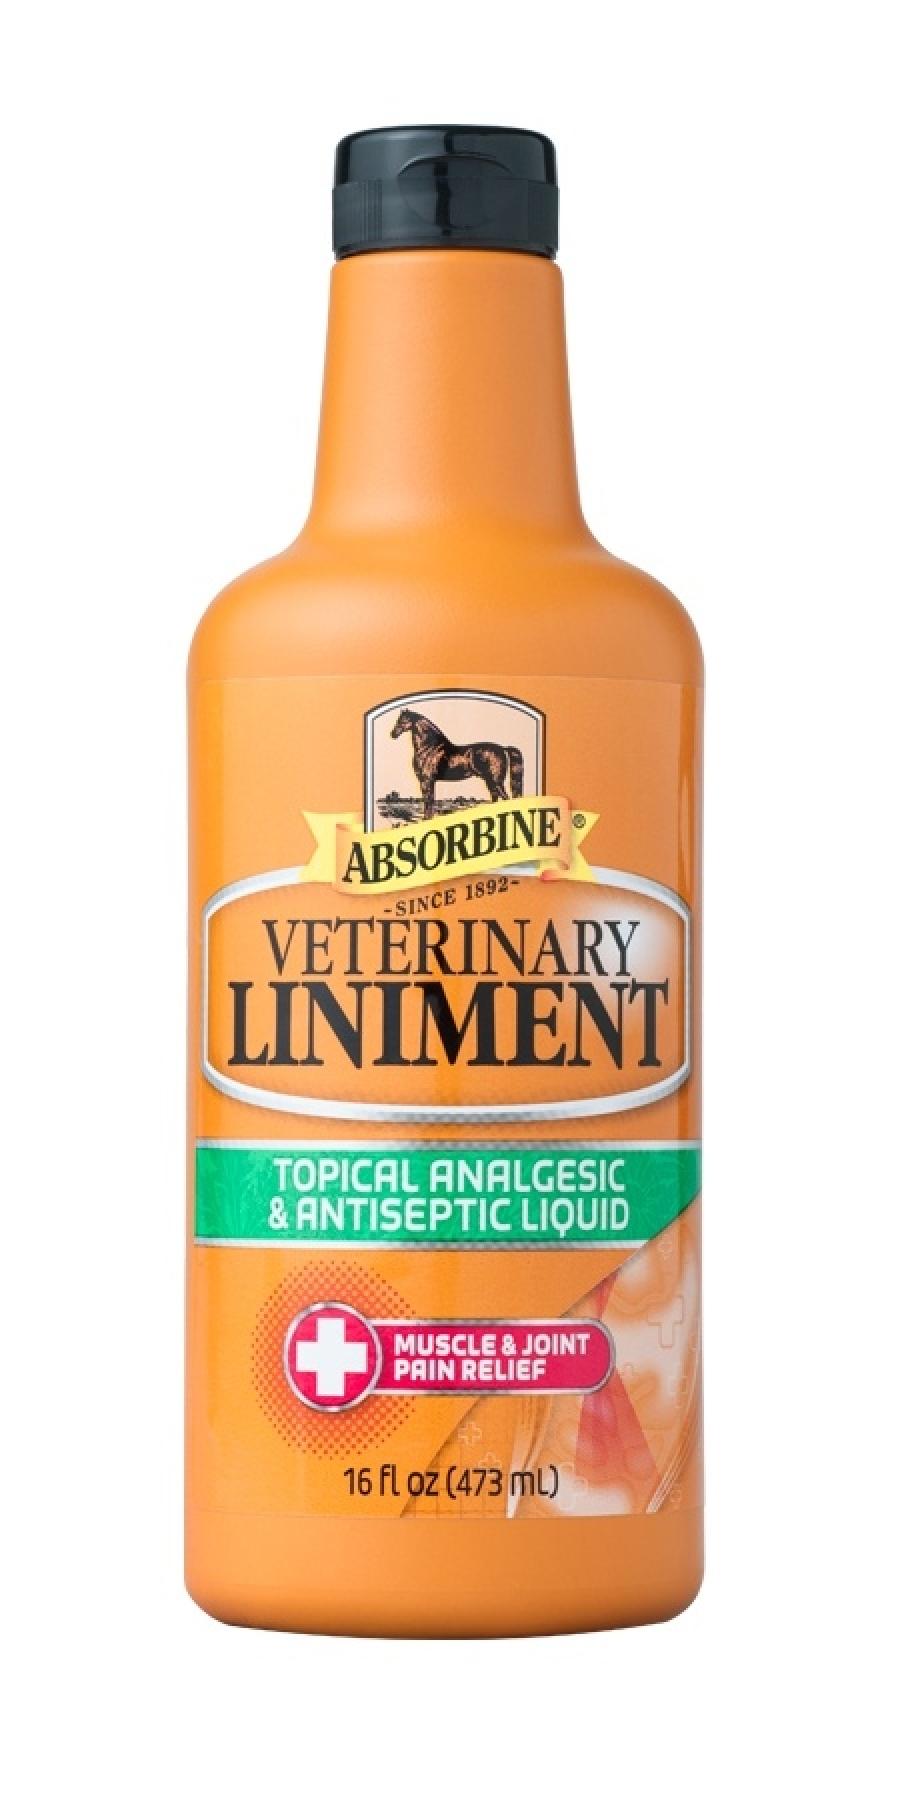 Absorbine Veterinary Liniment